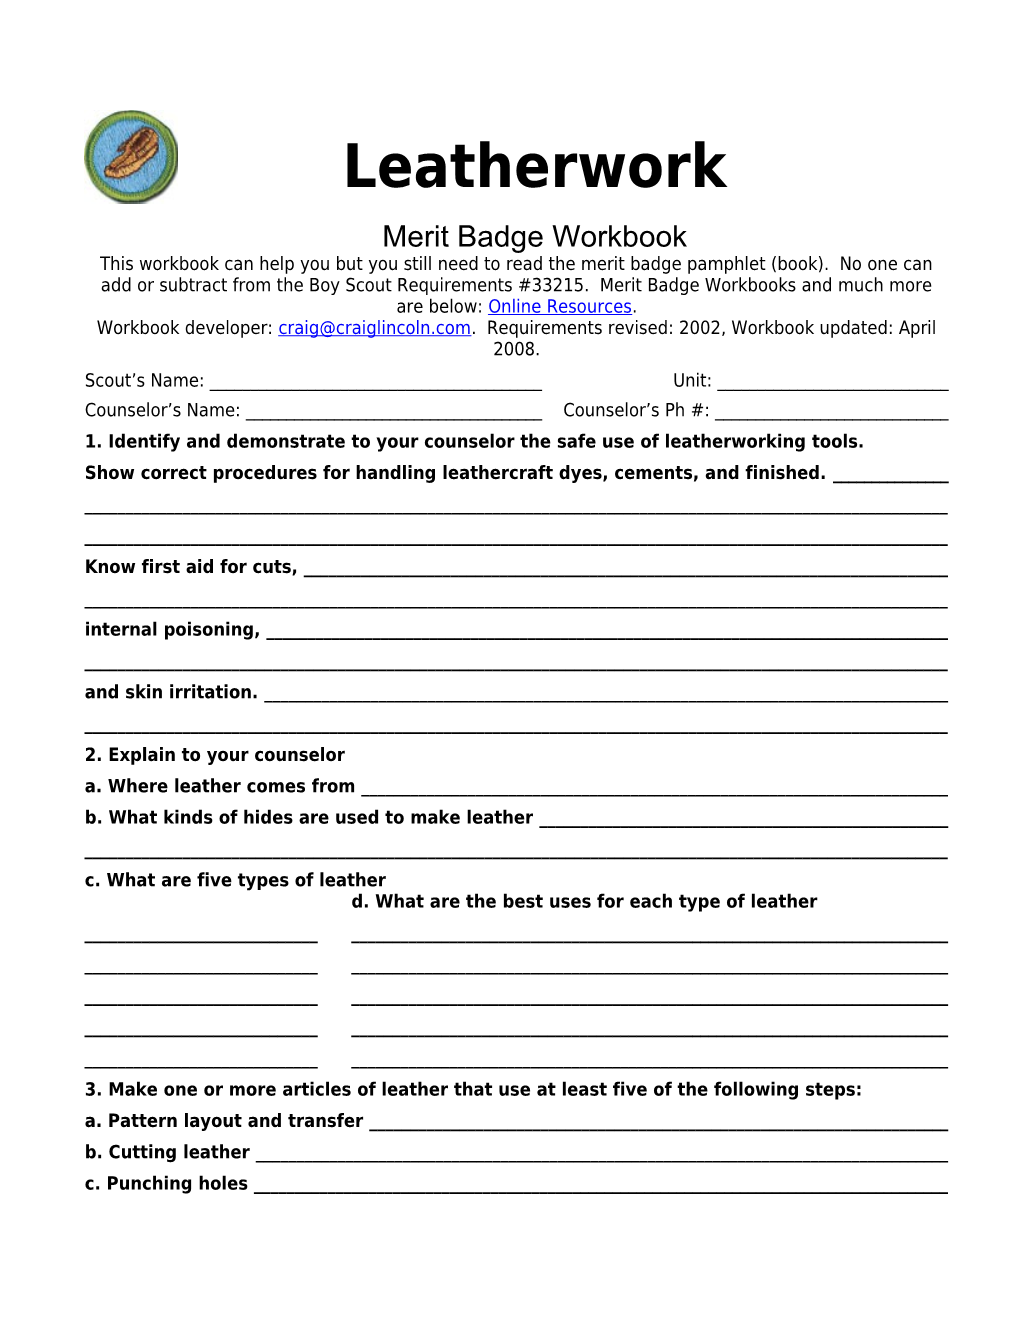 Leatherwork P. 2 Merit Badge Workbook Scout's Name: ______